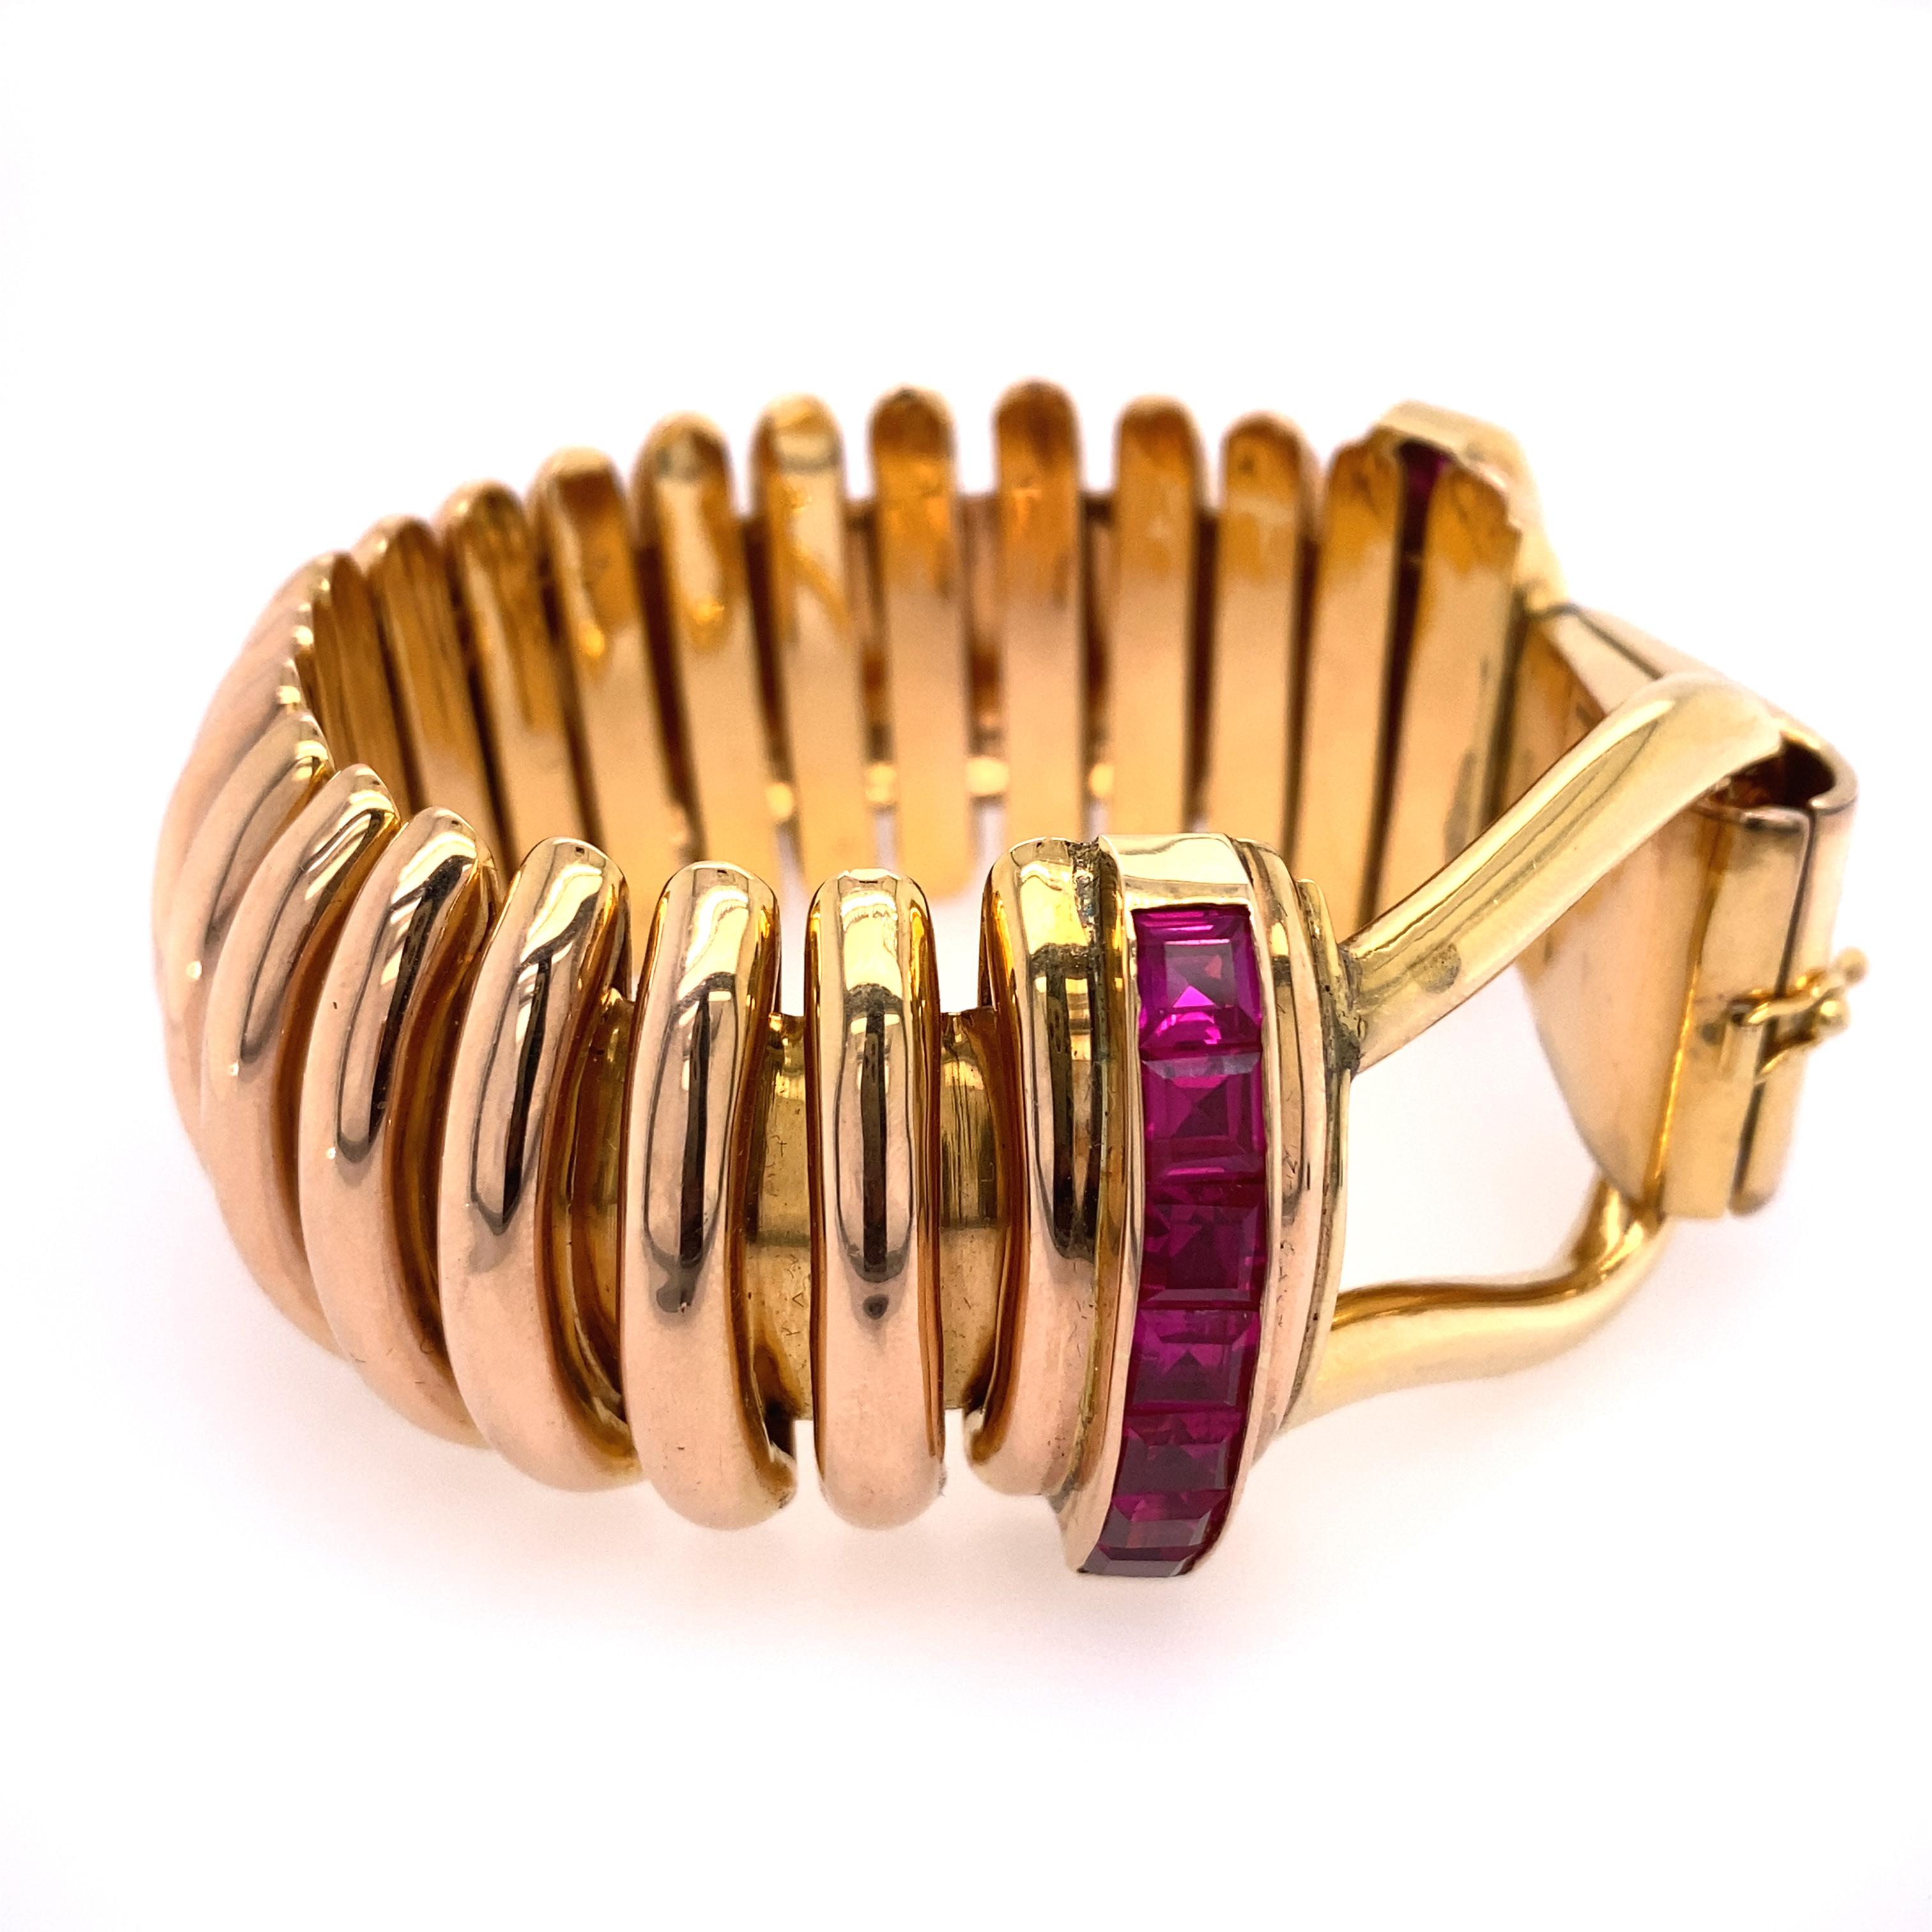 Schweres 18k Rose Gold Synthetischer Rubin Diamant Armband.
Gesamtgewicht 120,2 dwt.  Messung des Armbands 8,50